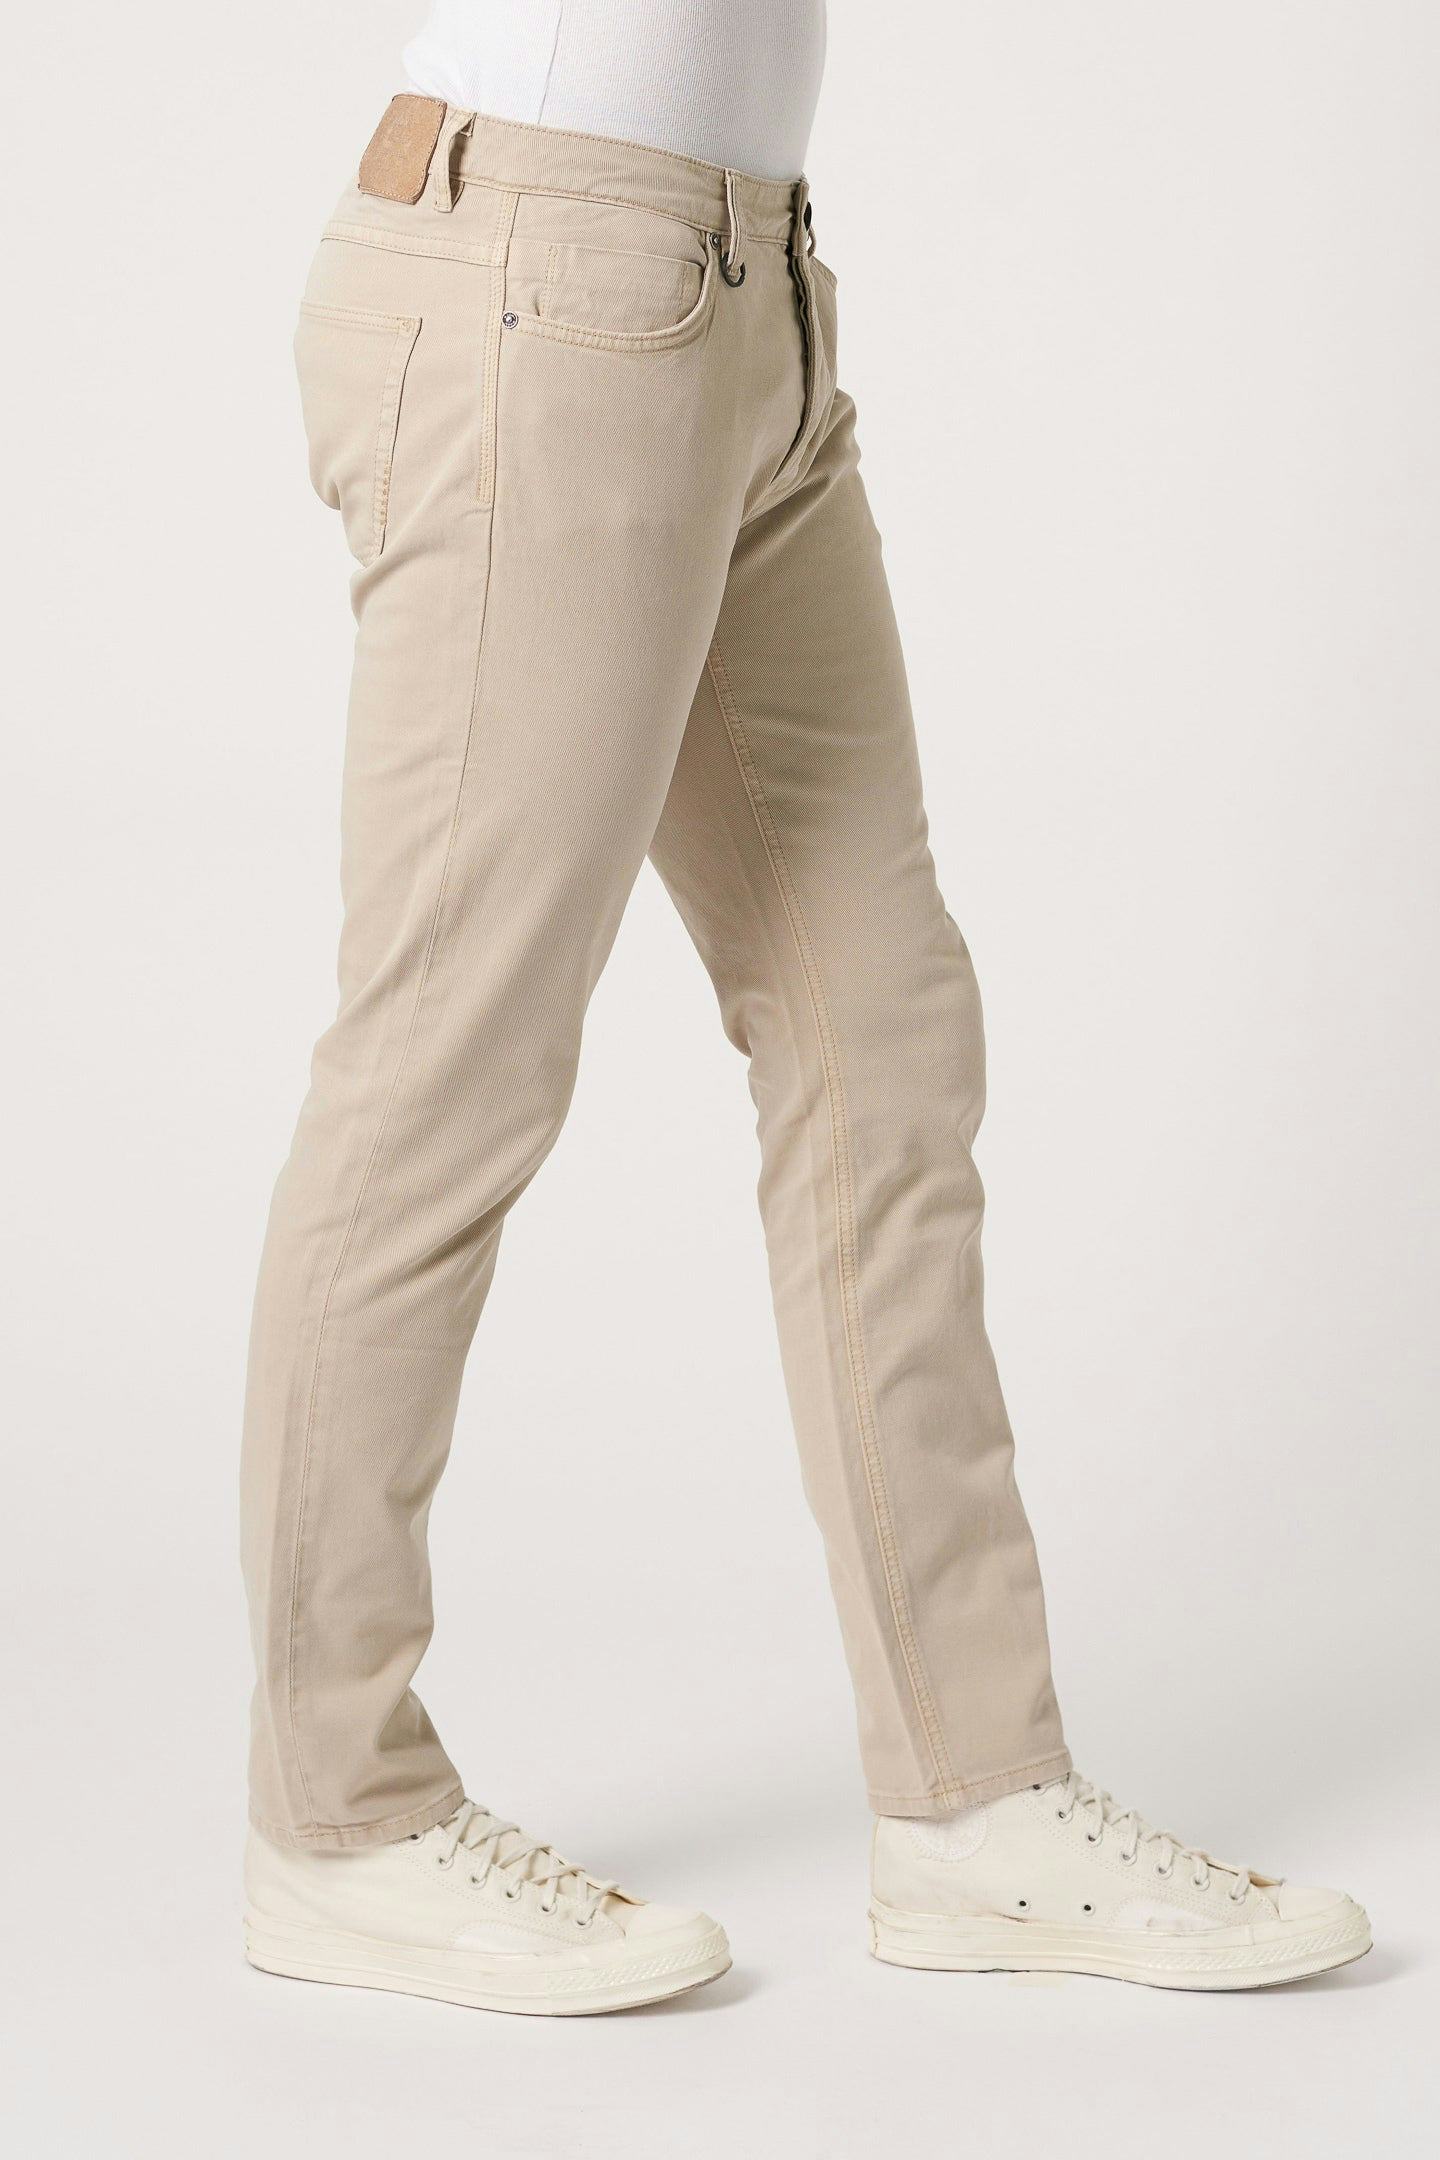 Lou Slim Twill - Washed Stone Neuw light beige mens-jeans 